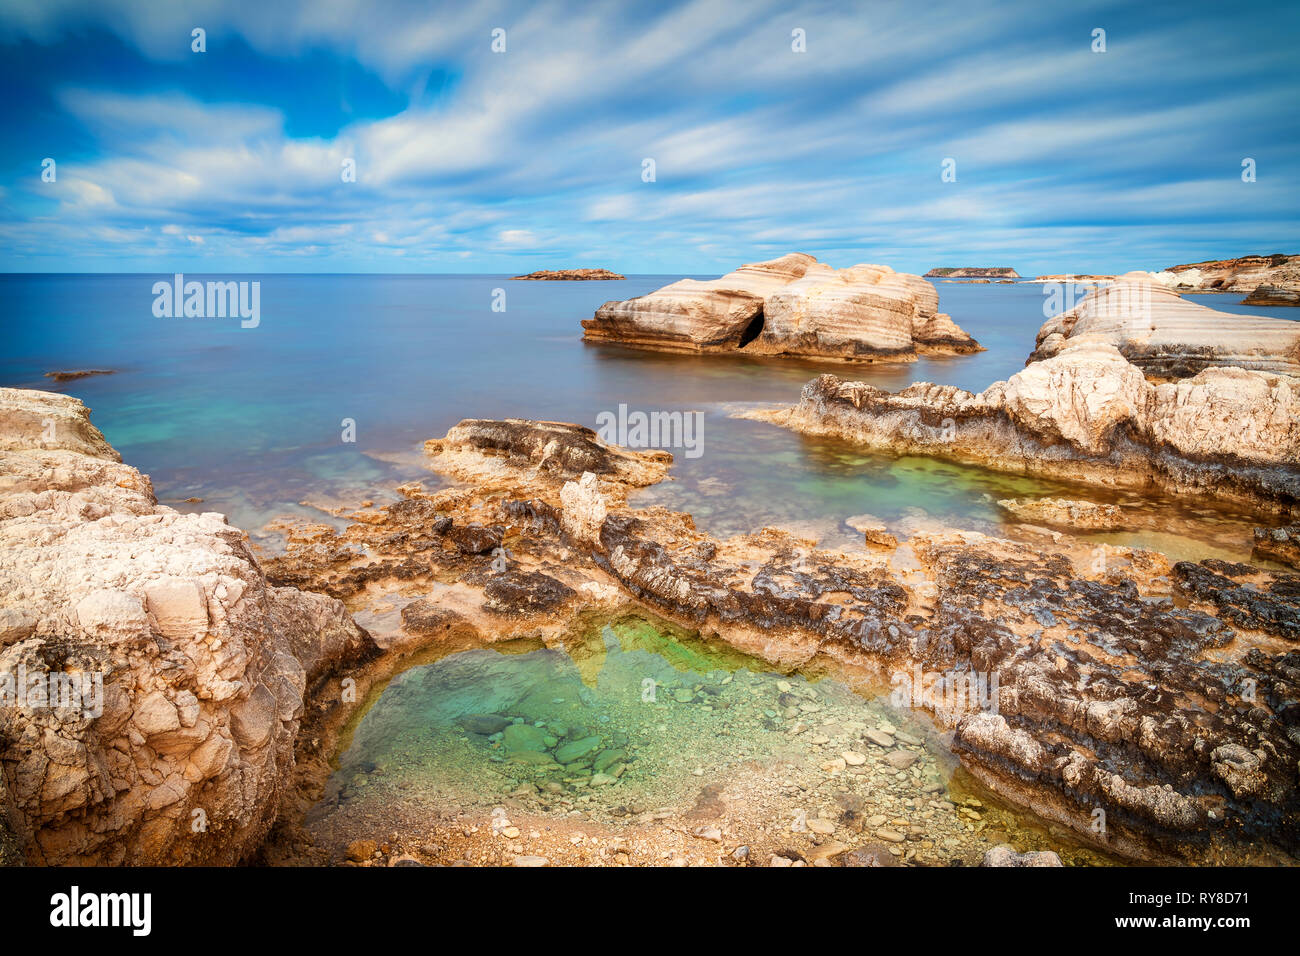 Sea caves on Coral bay coastline, Cyprus, Peyia, Paphos district Stock Photo